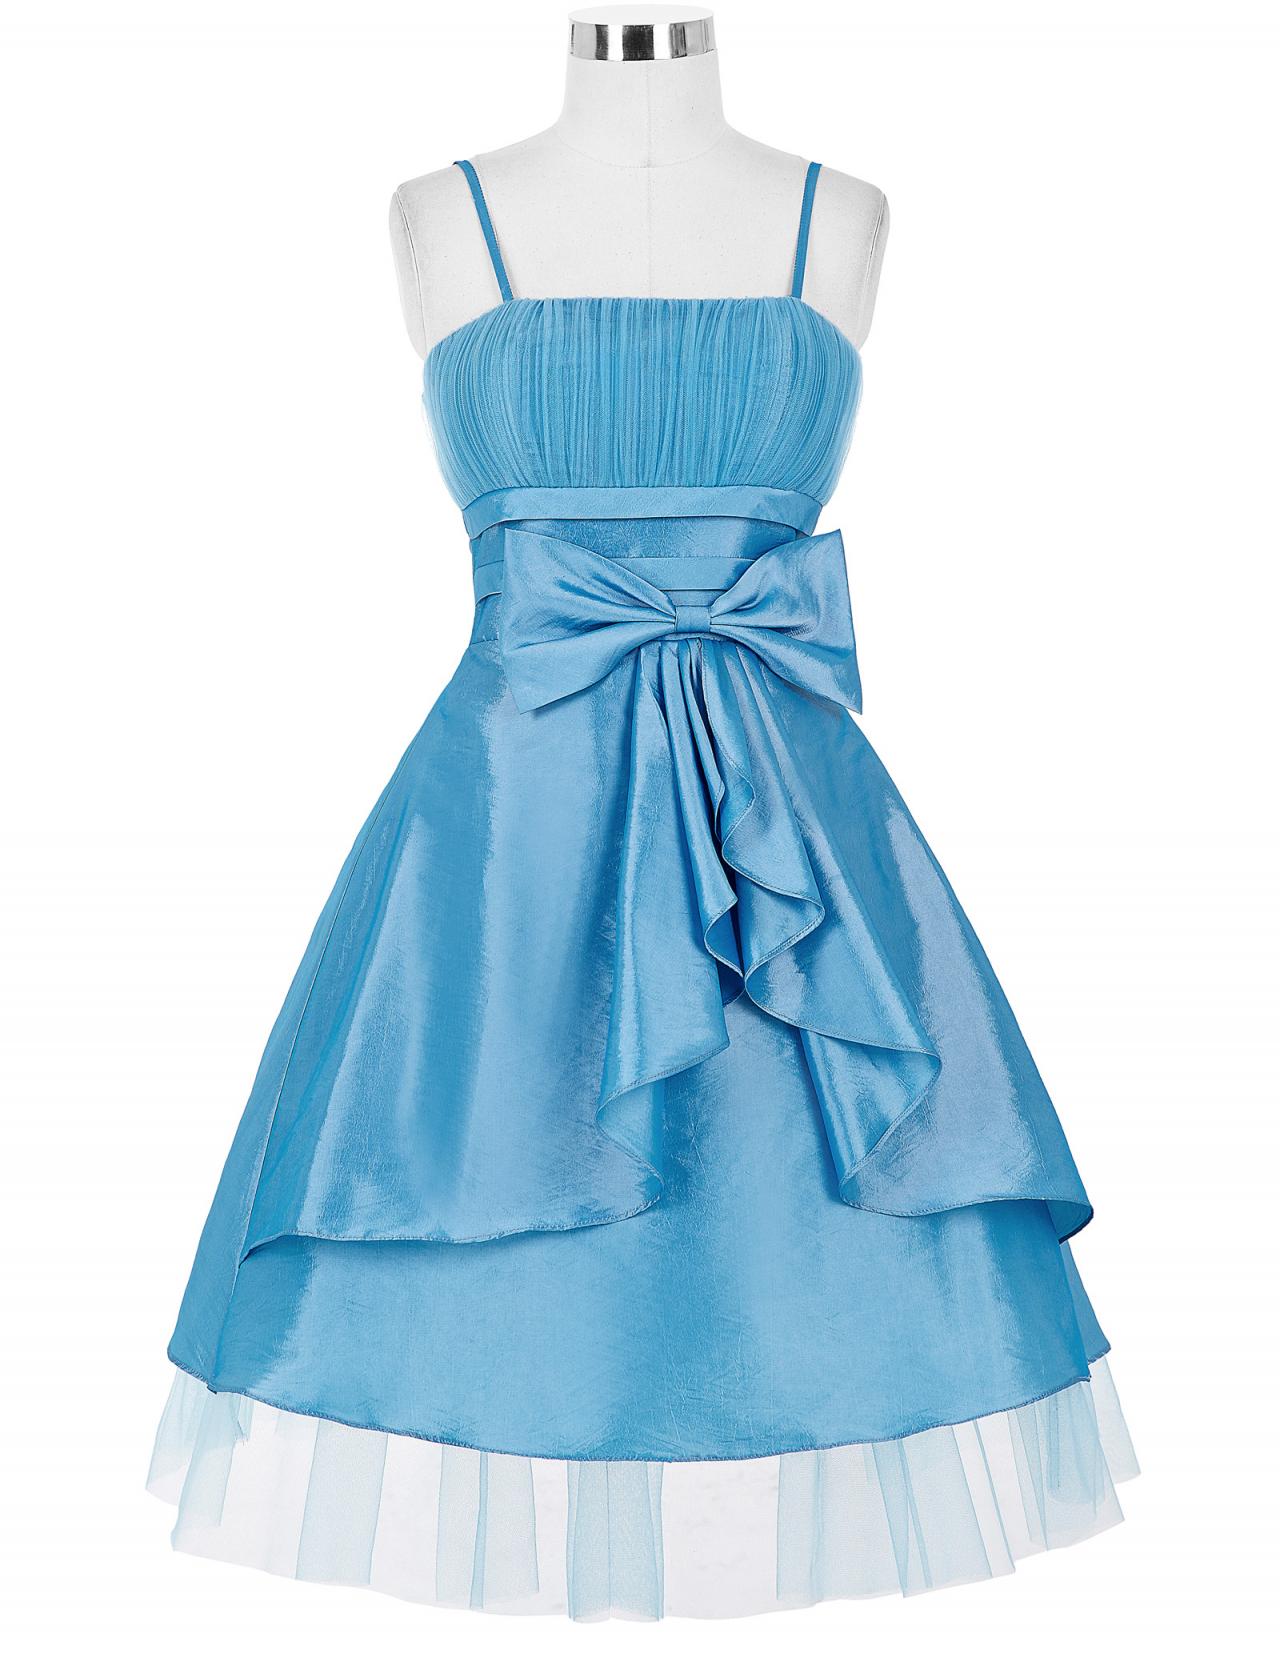 Spaghetti Straps Blue Homecoming Dresses With Bow,short Taffeta Prom Dresses 2017